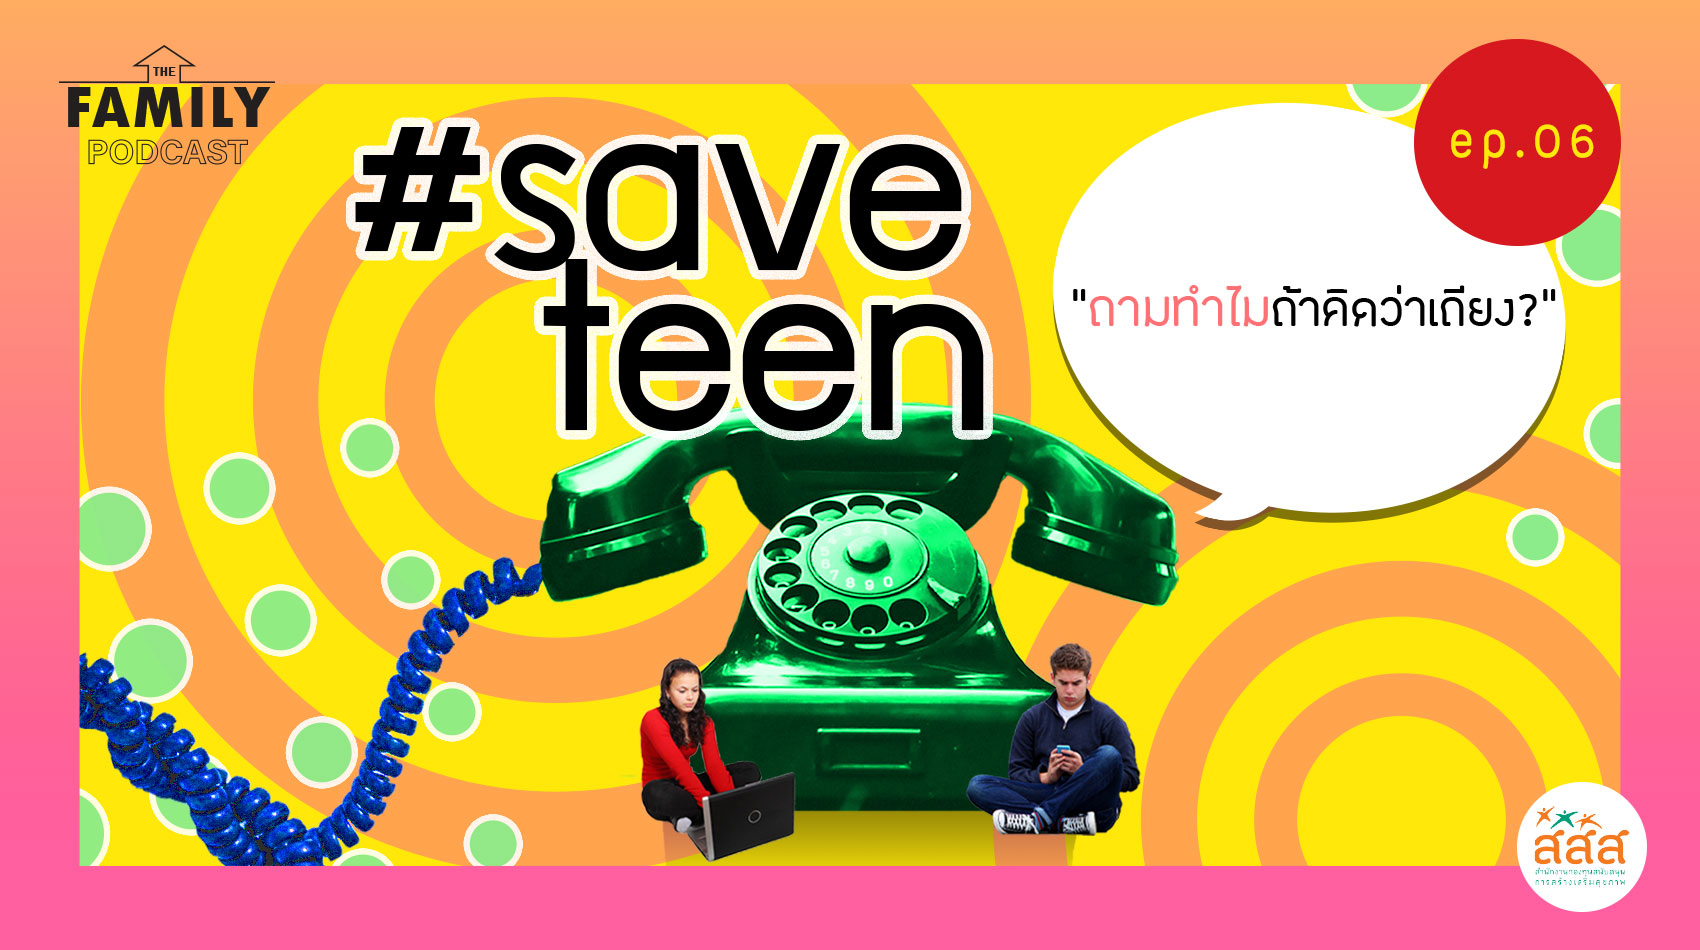 The Family Podcast Save teen EP.06 ถามทำไมถ้าคิดว่าเถียง